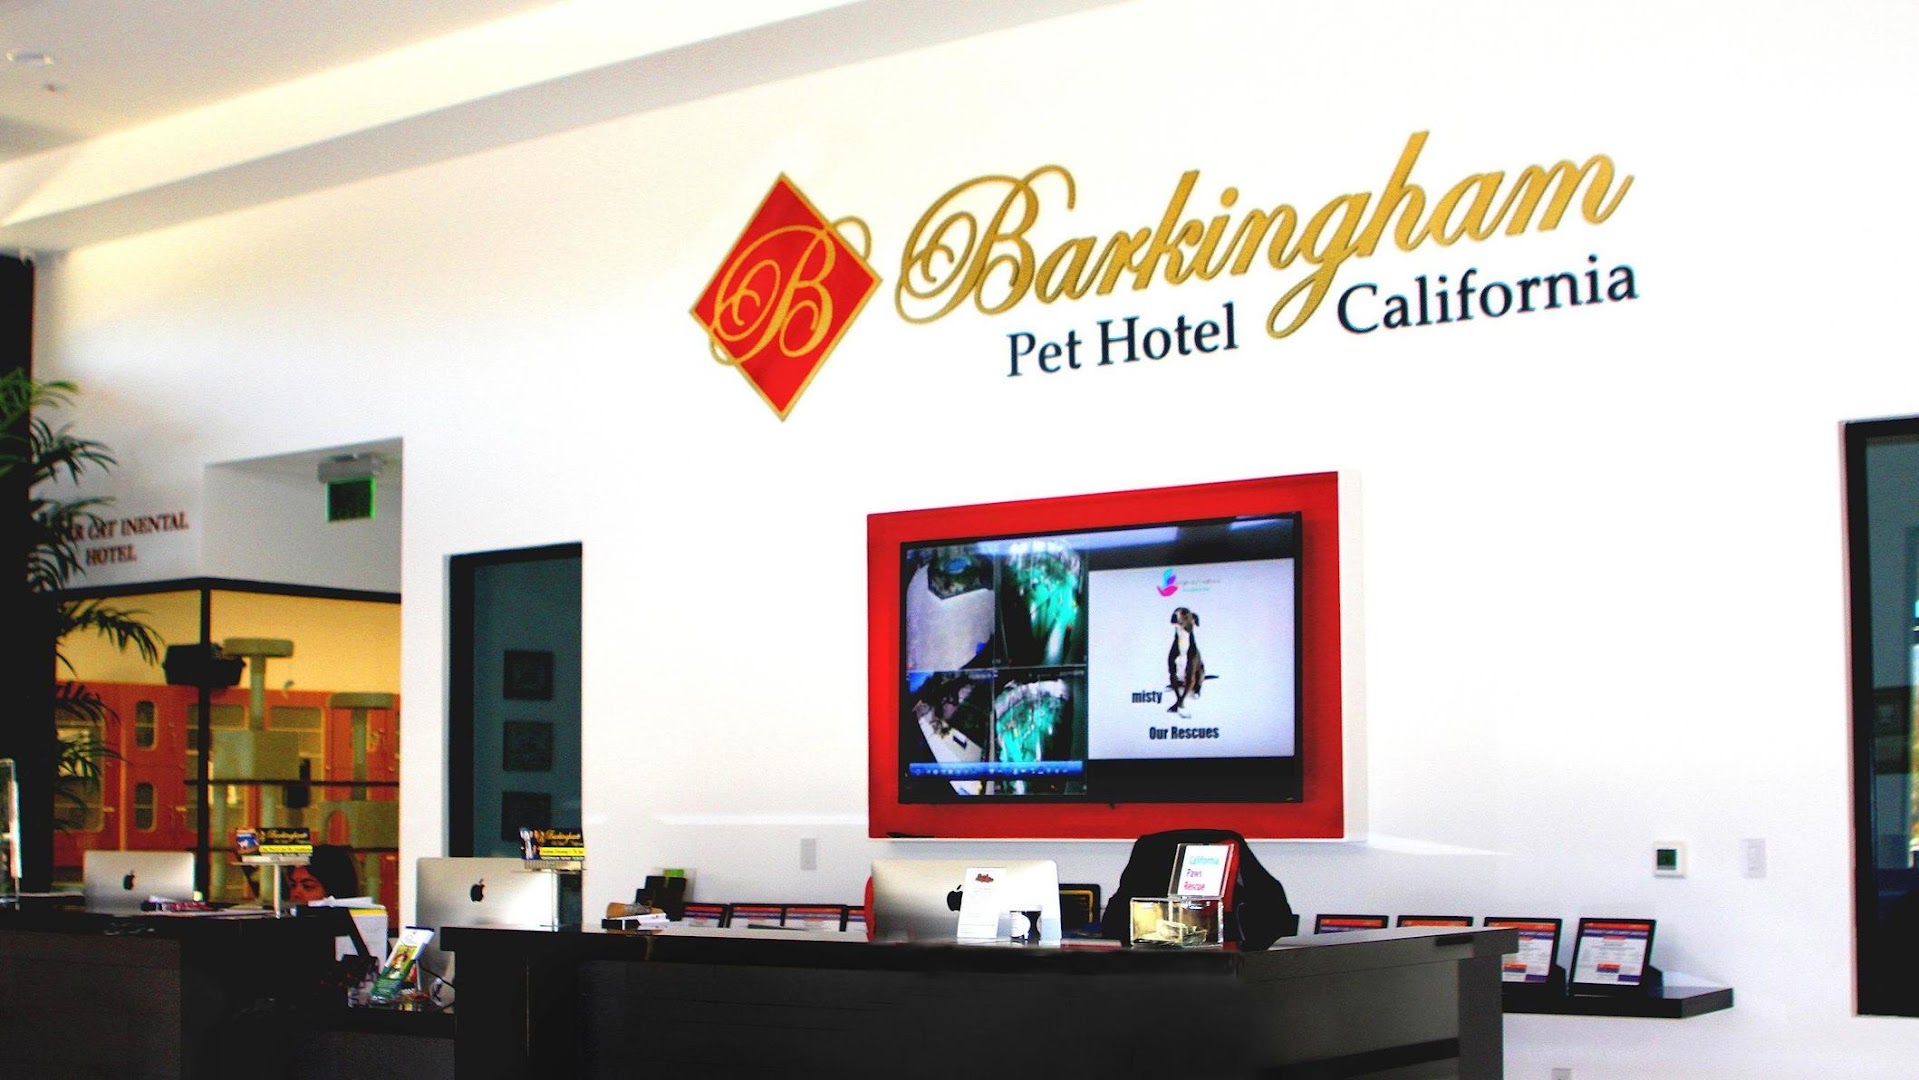 Barkingham Pet Hotel California